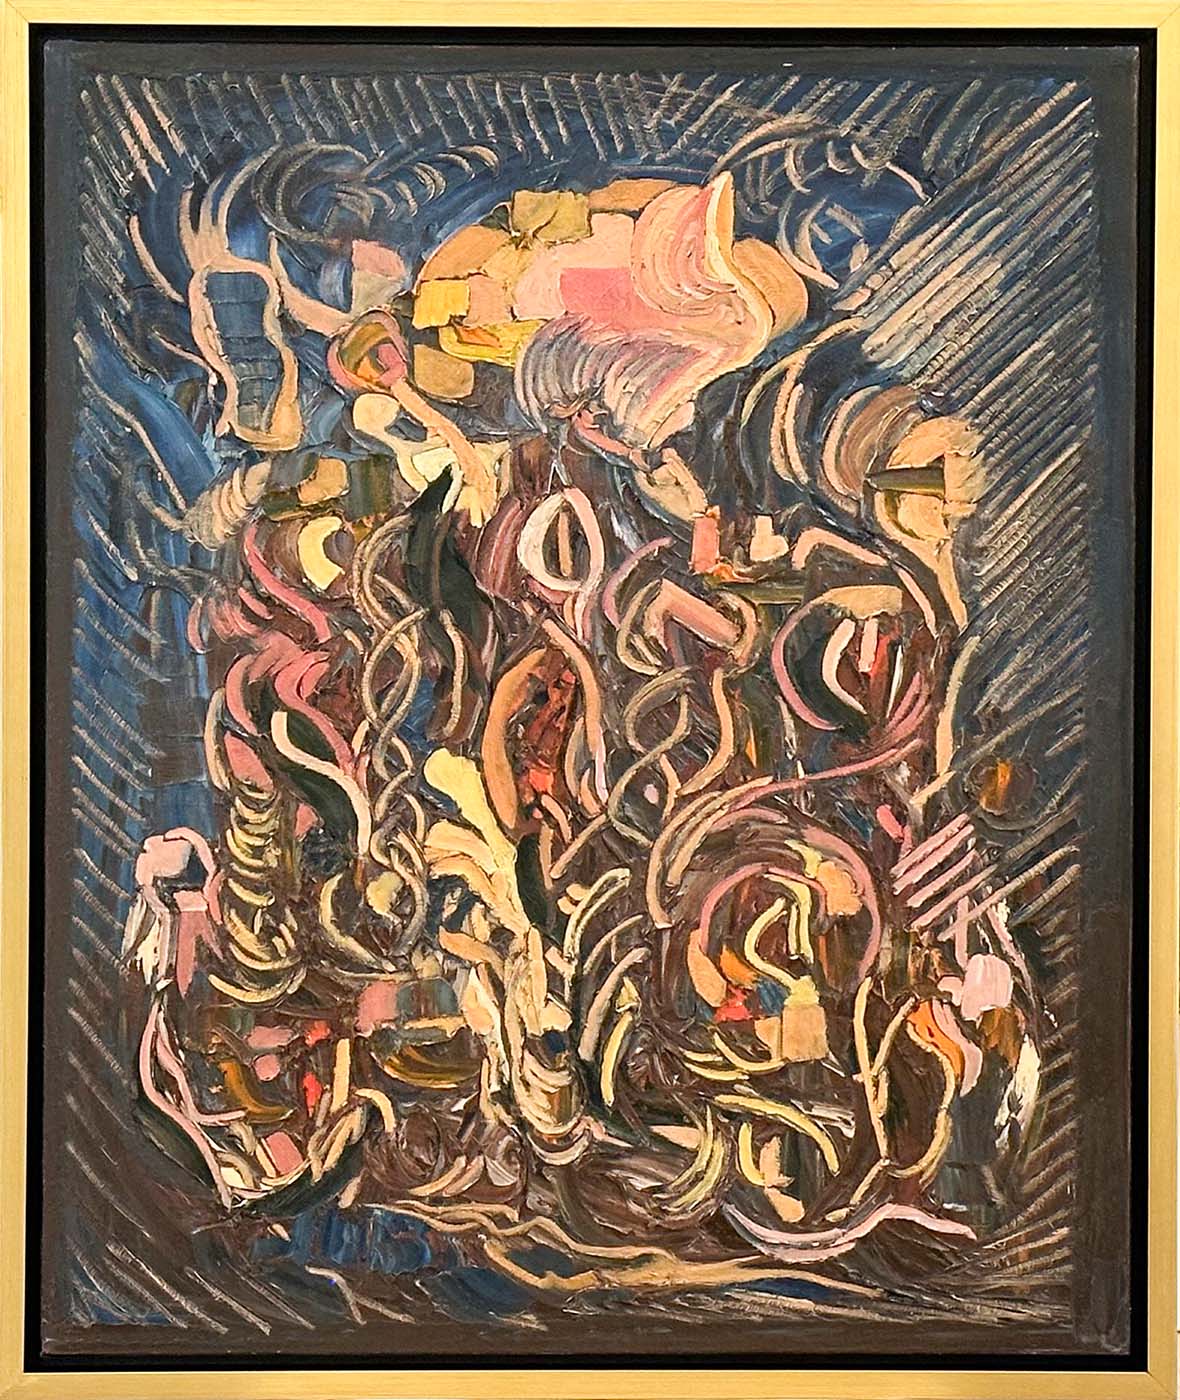 Abstract Art. Title: Medusa Revival, Oil on Canvas, 24x20 in, Framed by Canadian artist Franz H. Schmidt.